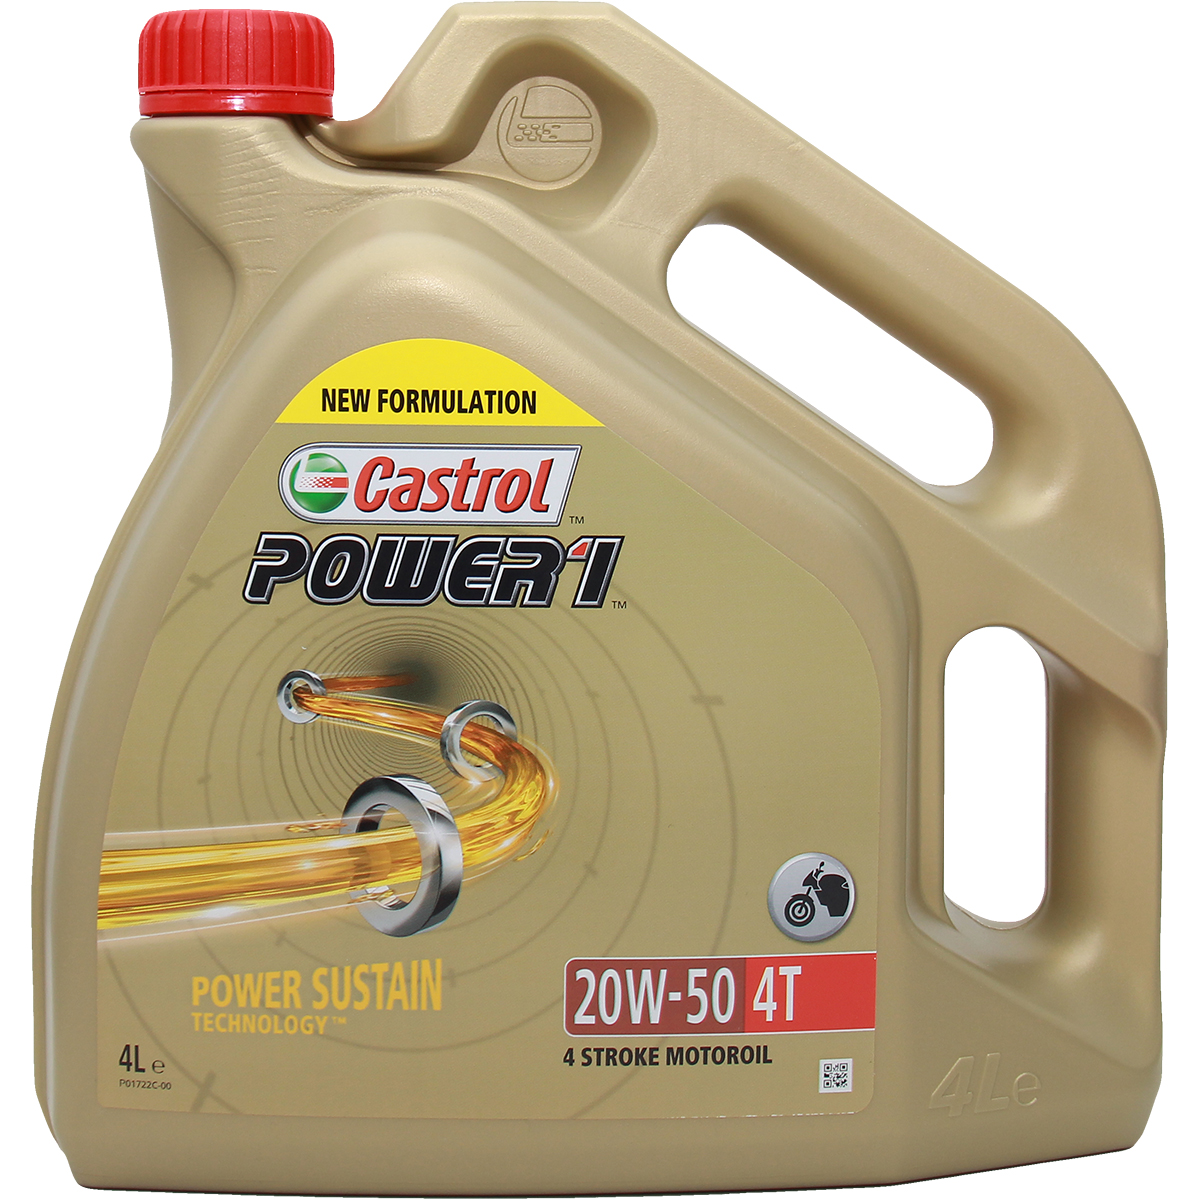 Castrol Power 1 4T 20W-50 4 Liter